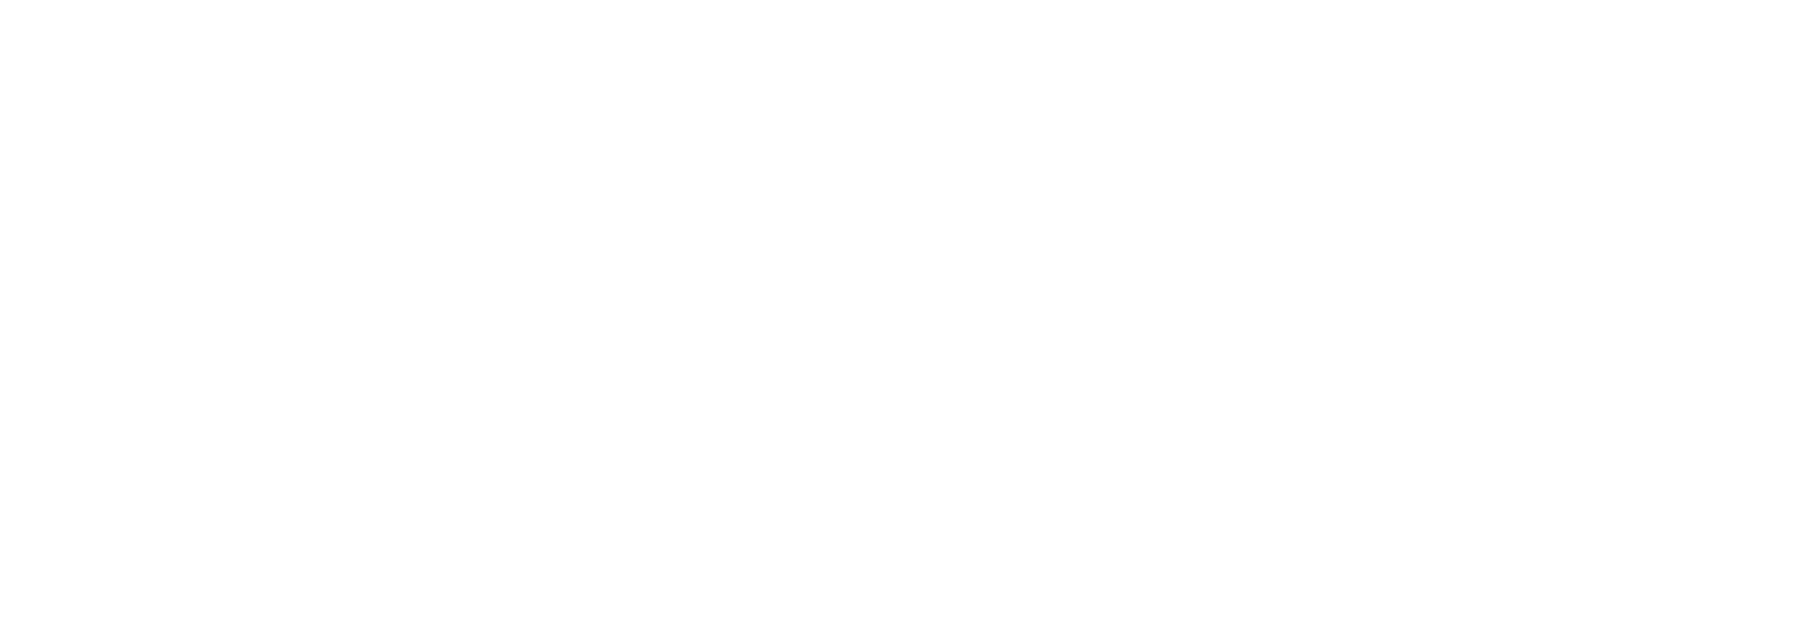 Union Annual Budgets logo